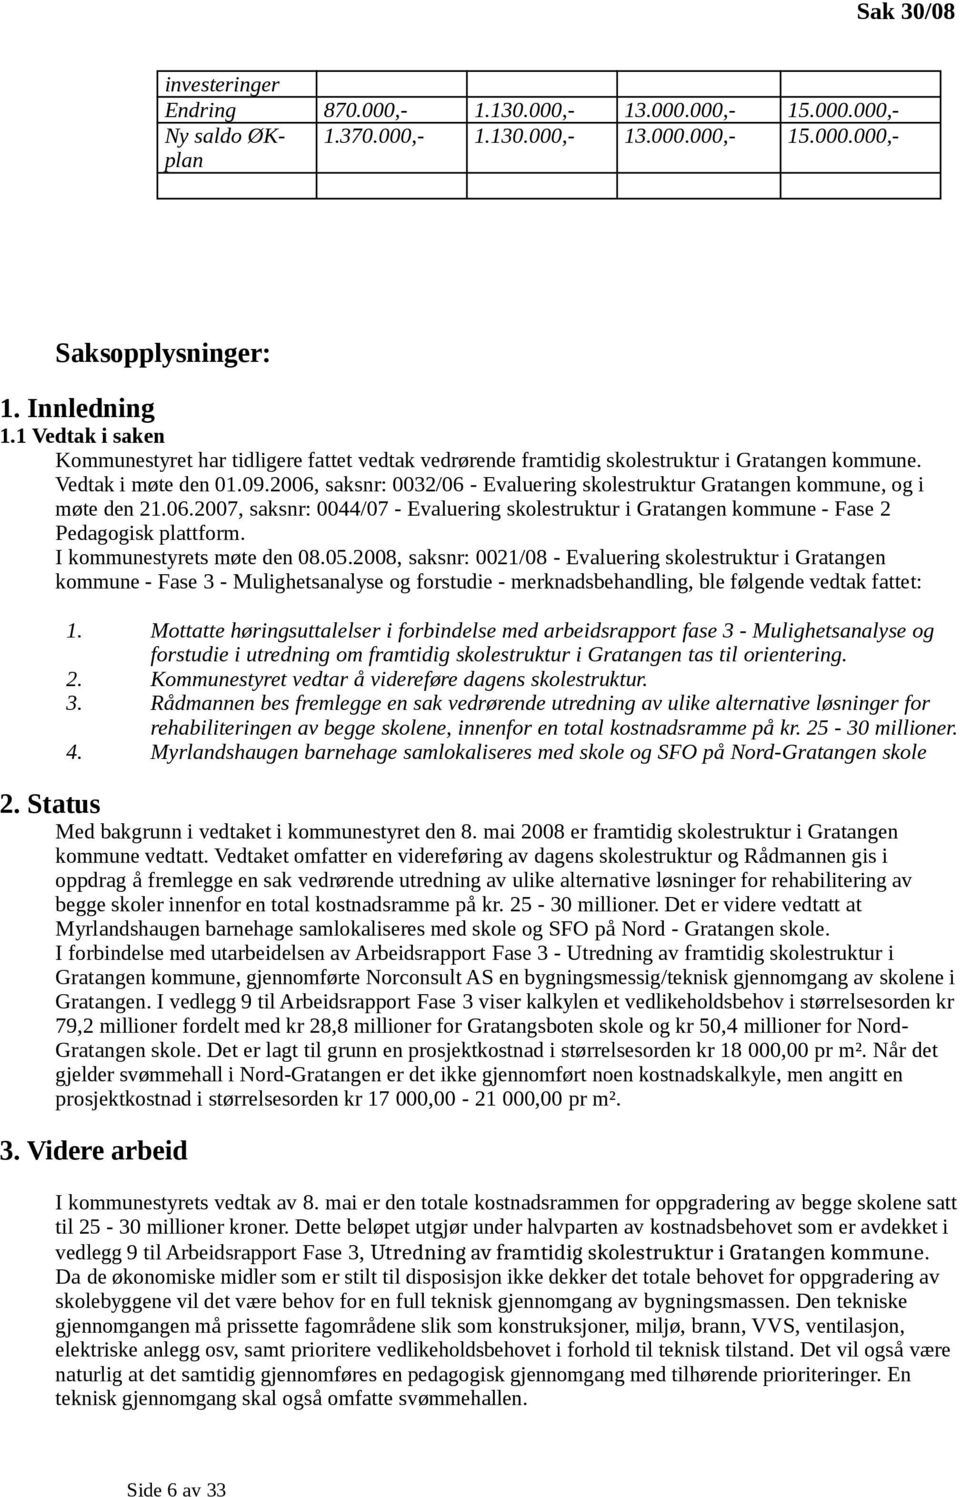 2006, saksnr: 0032/06 - Evaluering skolestruktur Gratangen kommune, og i møte den 21.06.2007, saksnr: 0044/07 - Evaluering skolestruktur i Gratangen kommune - Fase 2 Pedagogisk plattform.